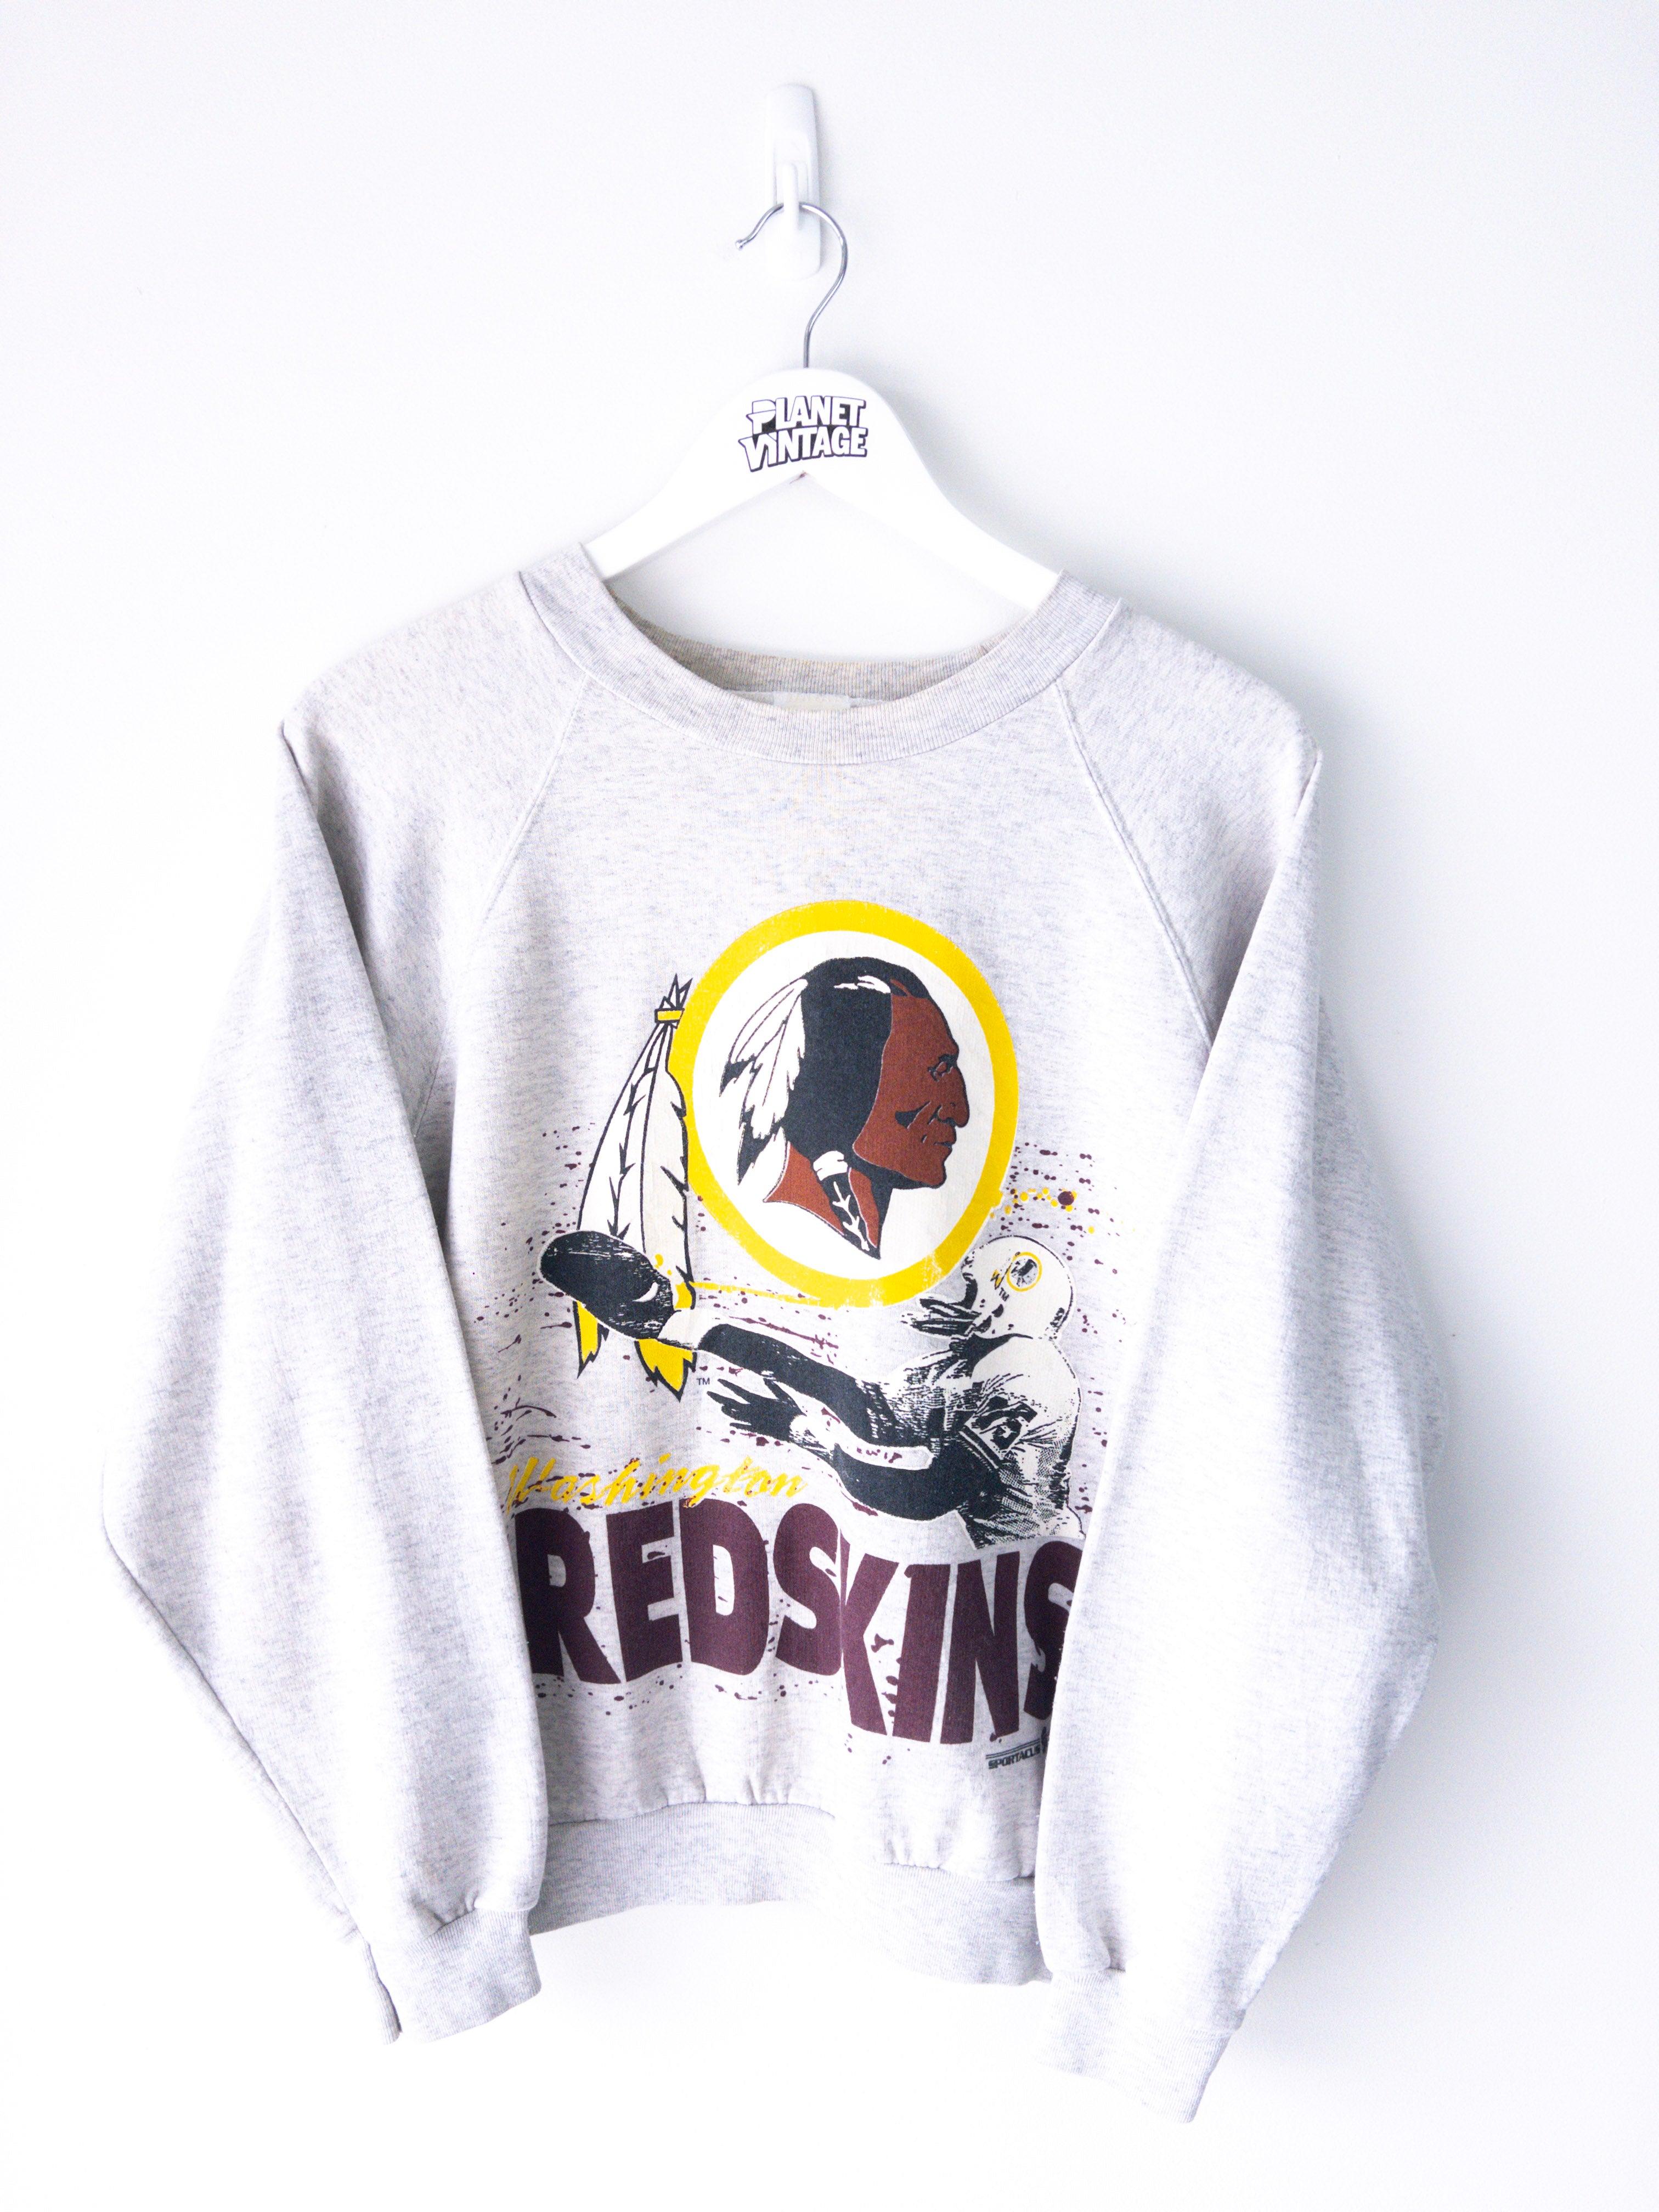 Vintage Washington Redskins 1992 Sweatshirt (M) - Planet Vintage Store